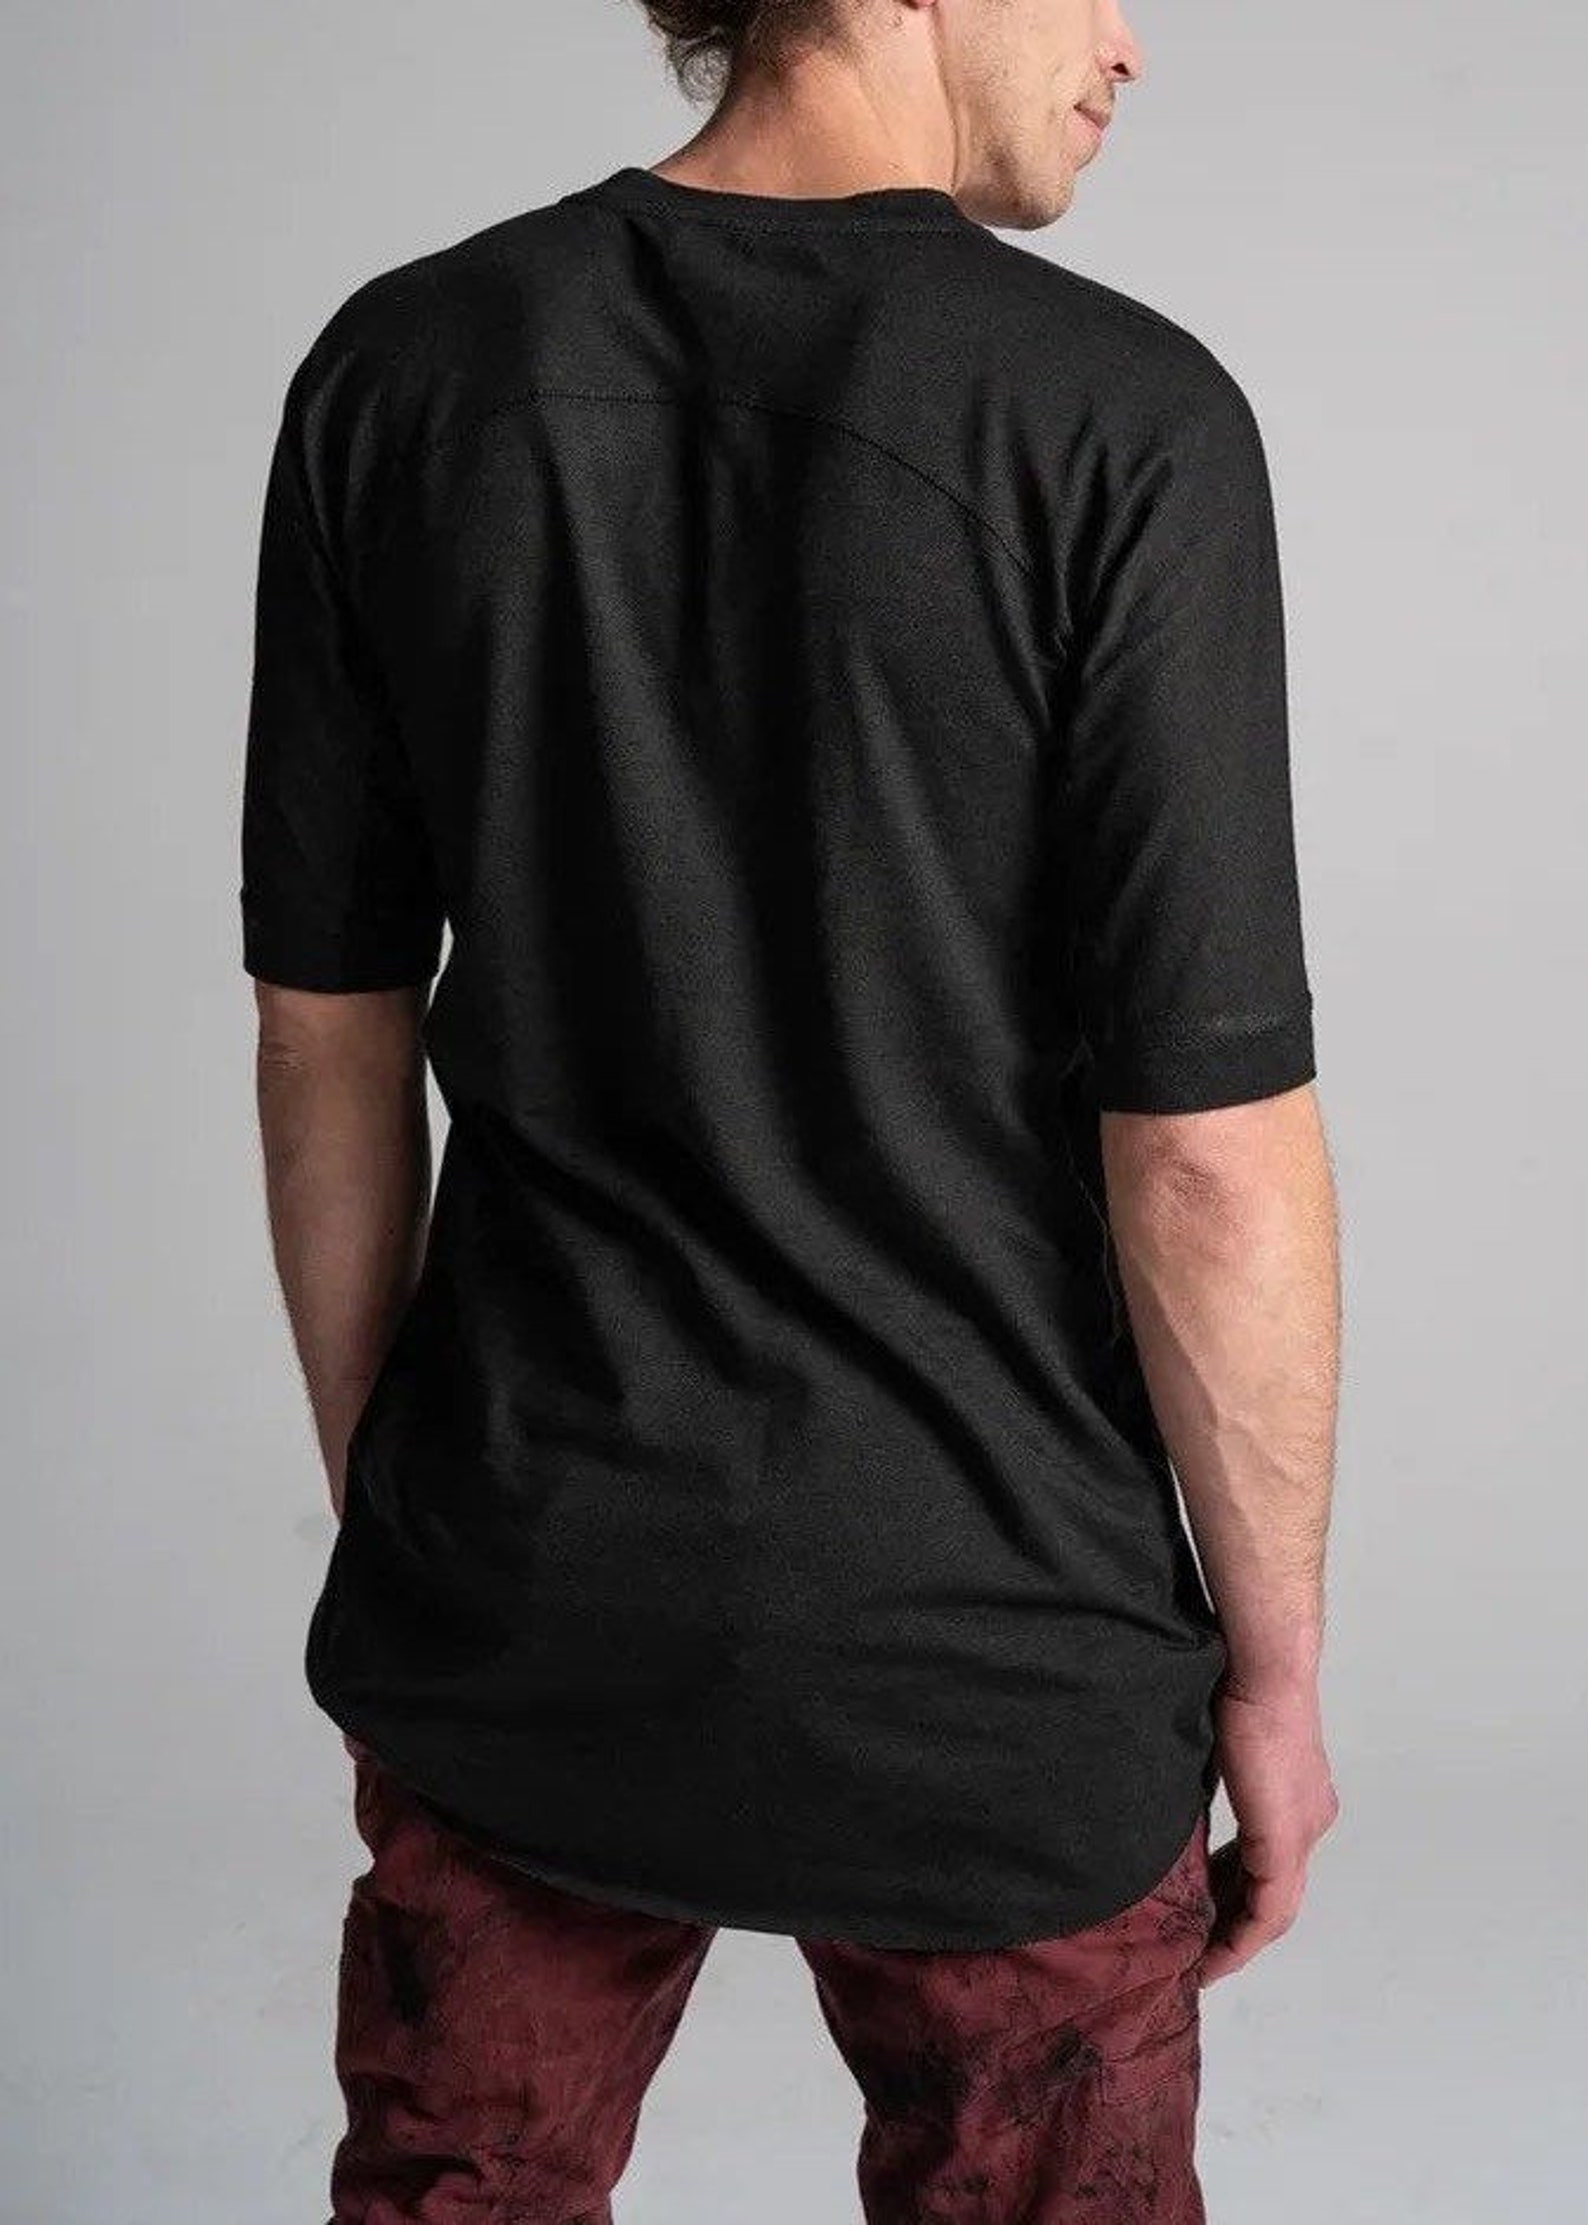 N13L unusual shoulder t-shirt | Etsy